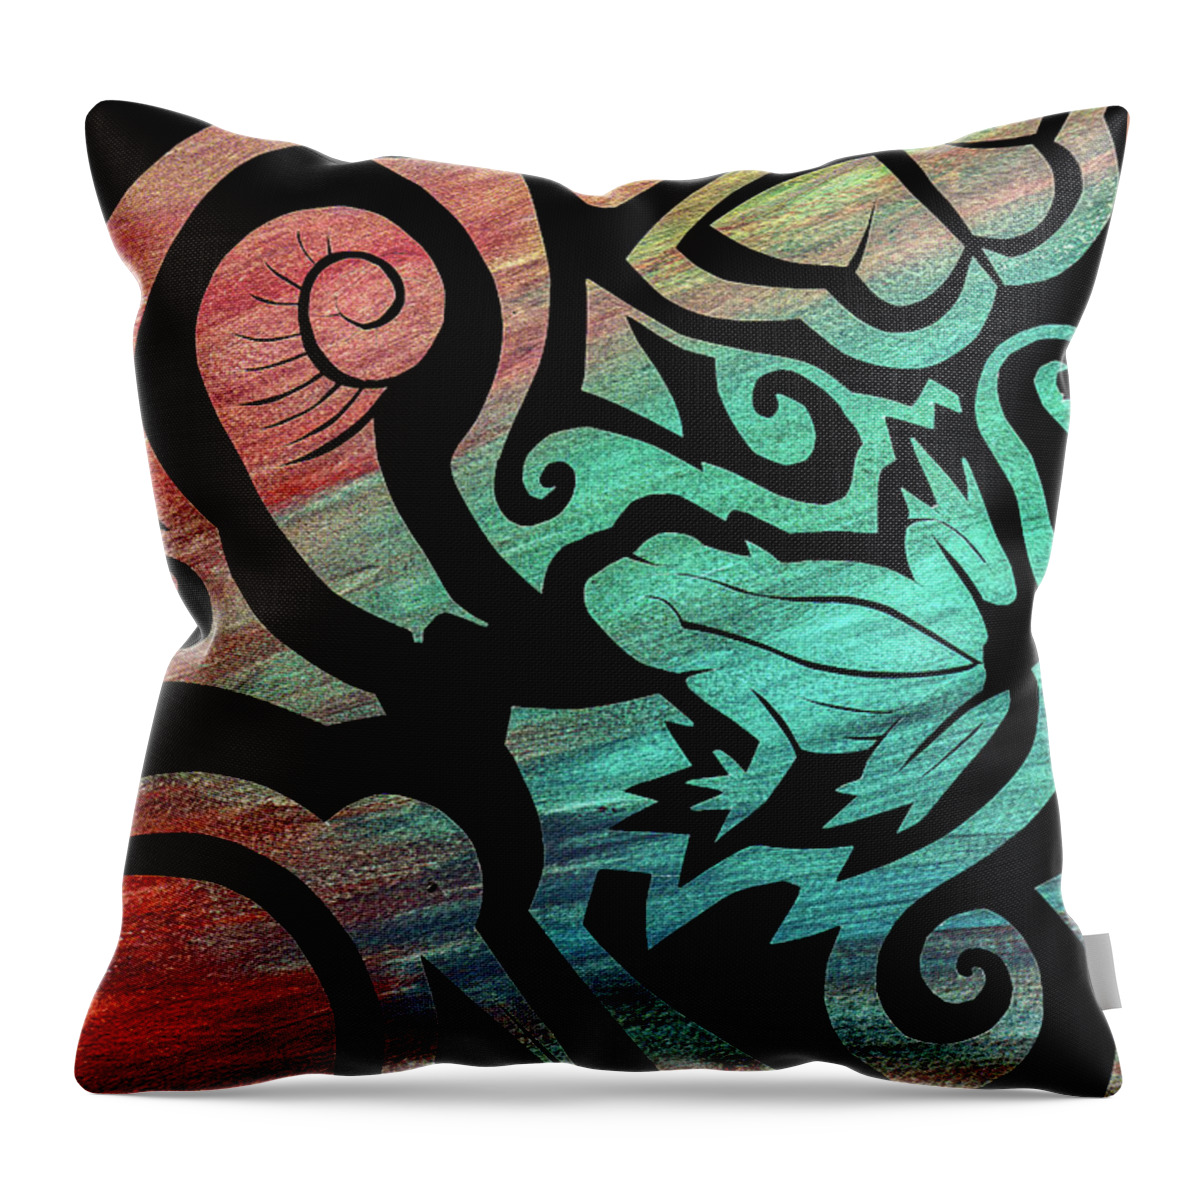 Kiwiana Throw Pillow featuring the mixed media Kiwi Nature by Roseanne Jones